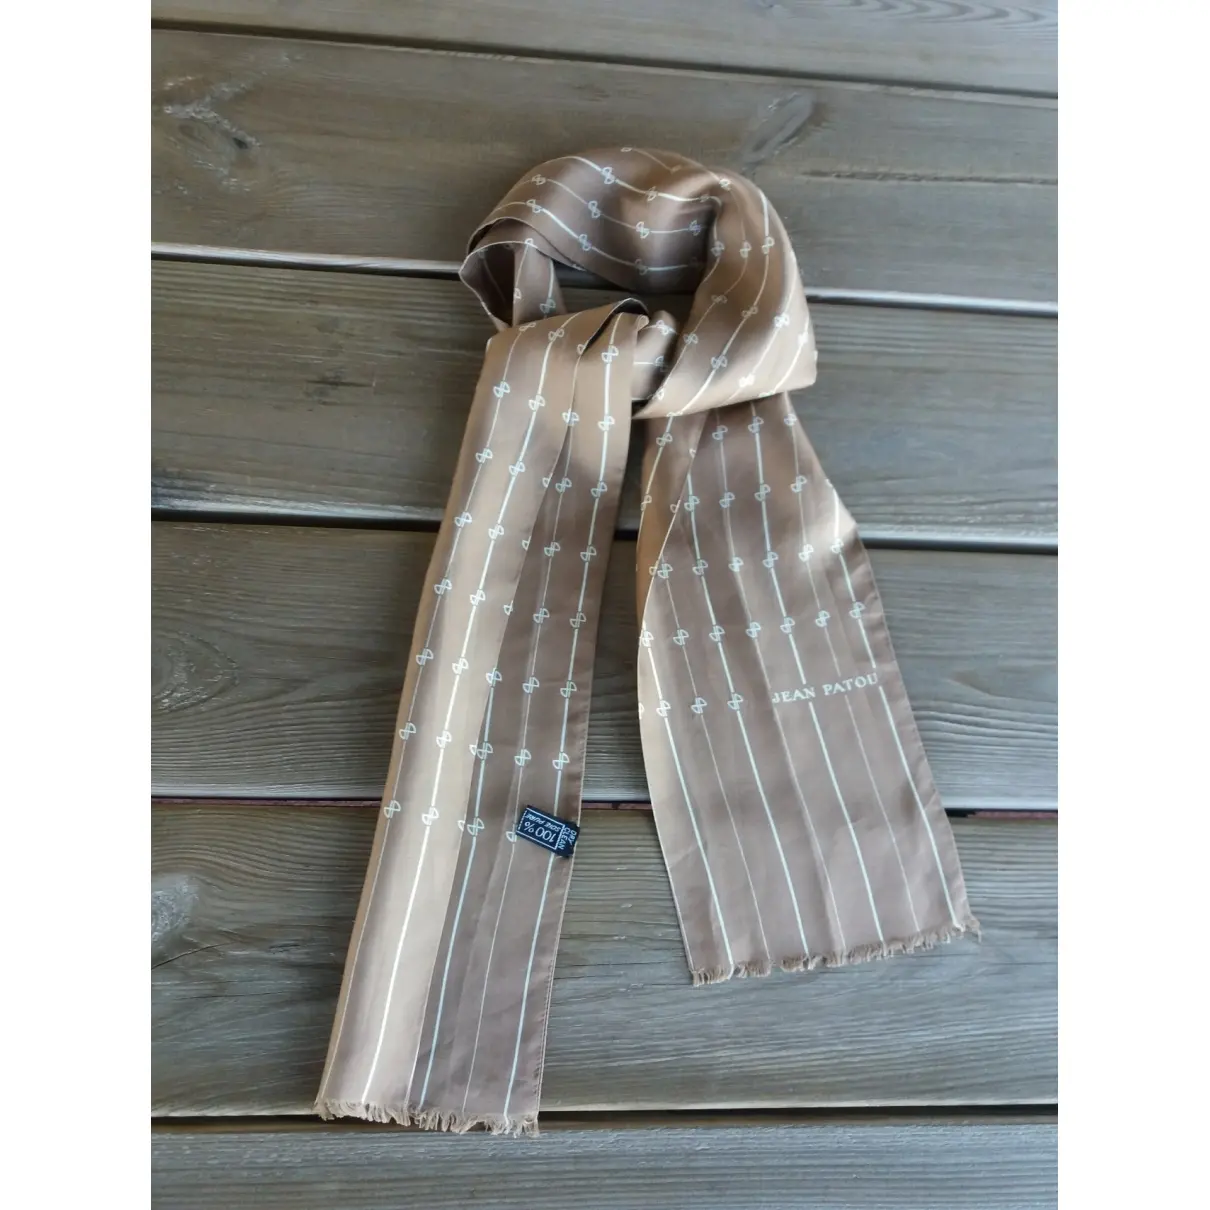 Buy Jean Patou Silk scarf & pocket square online - Vintage